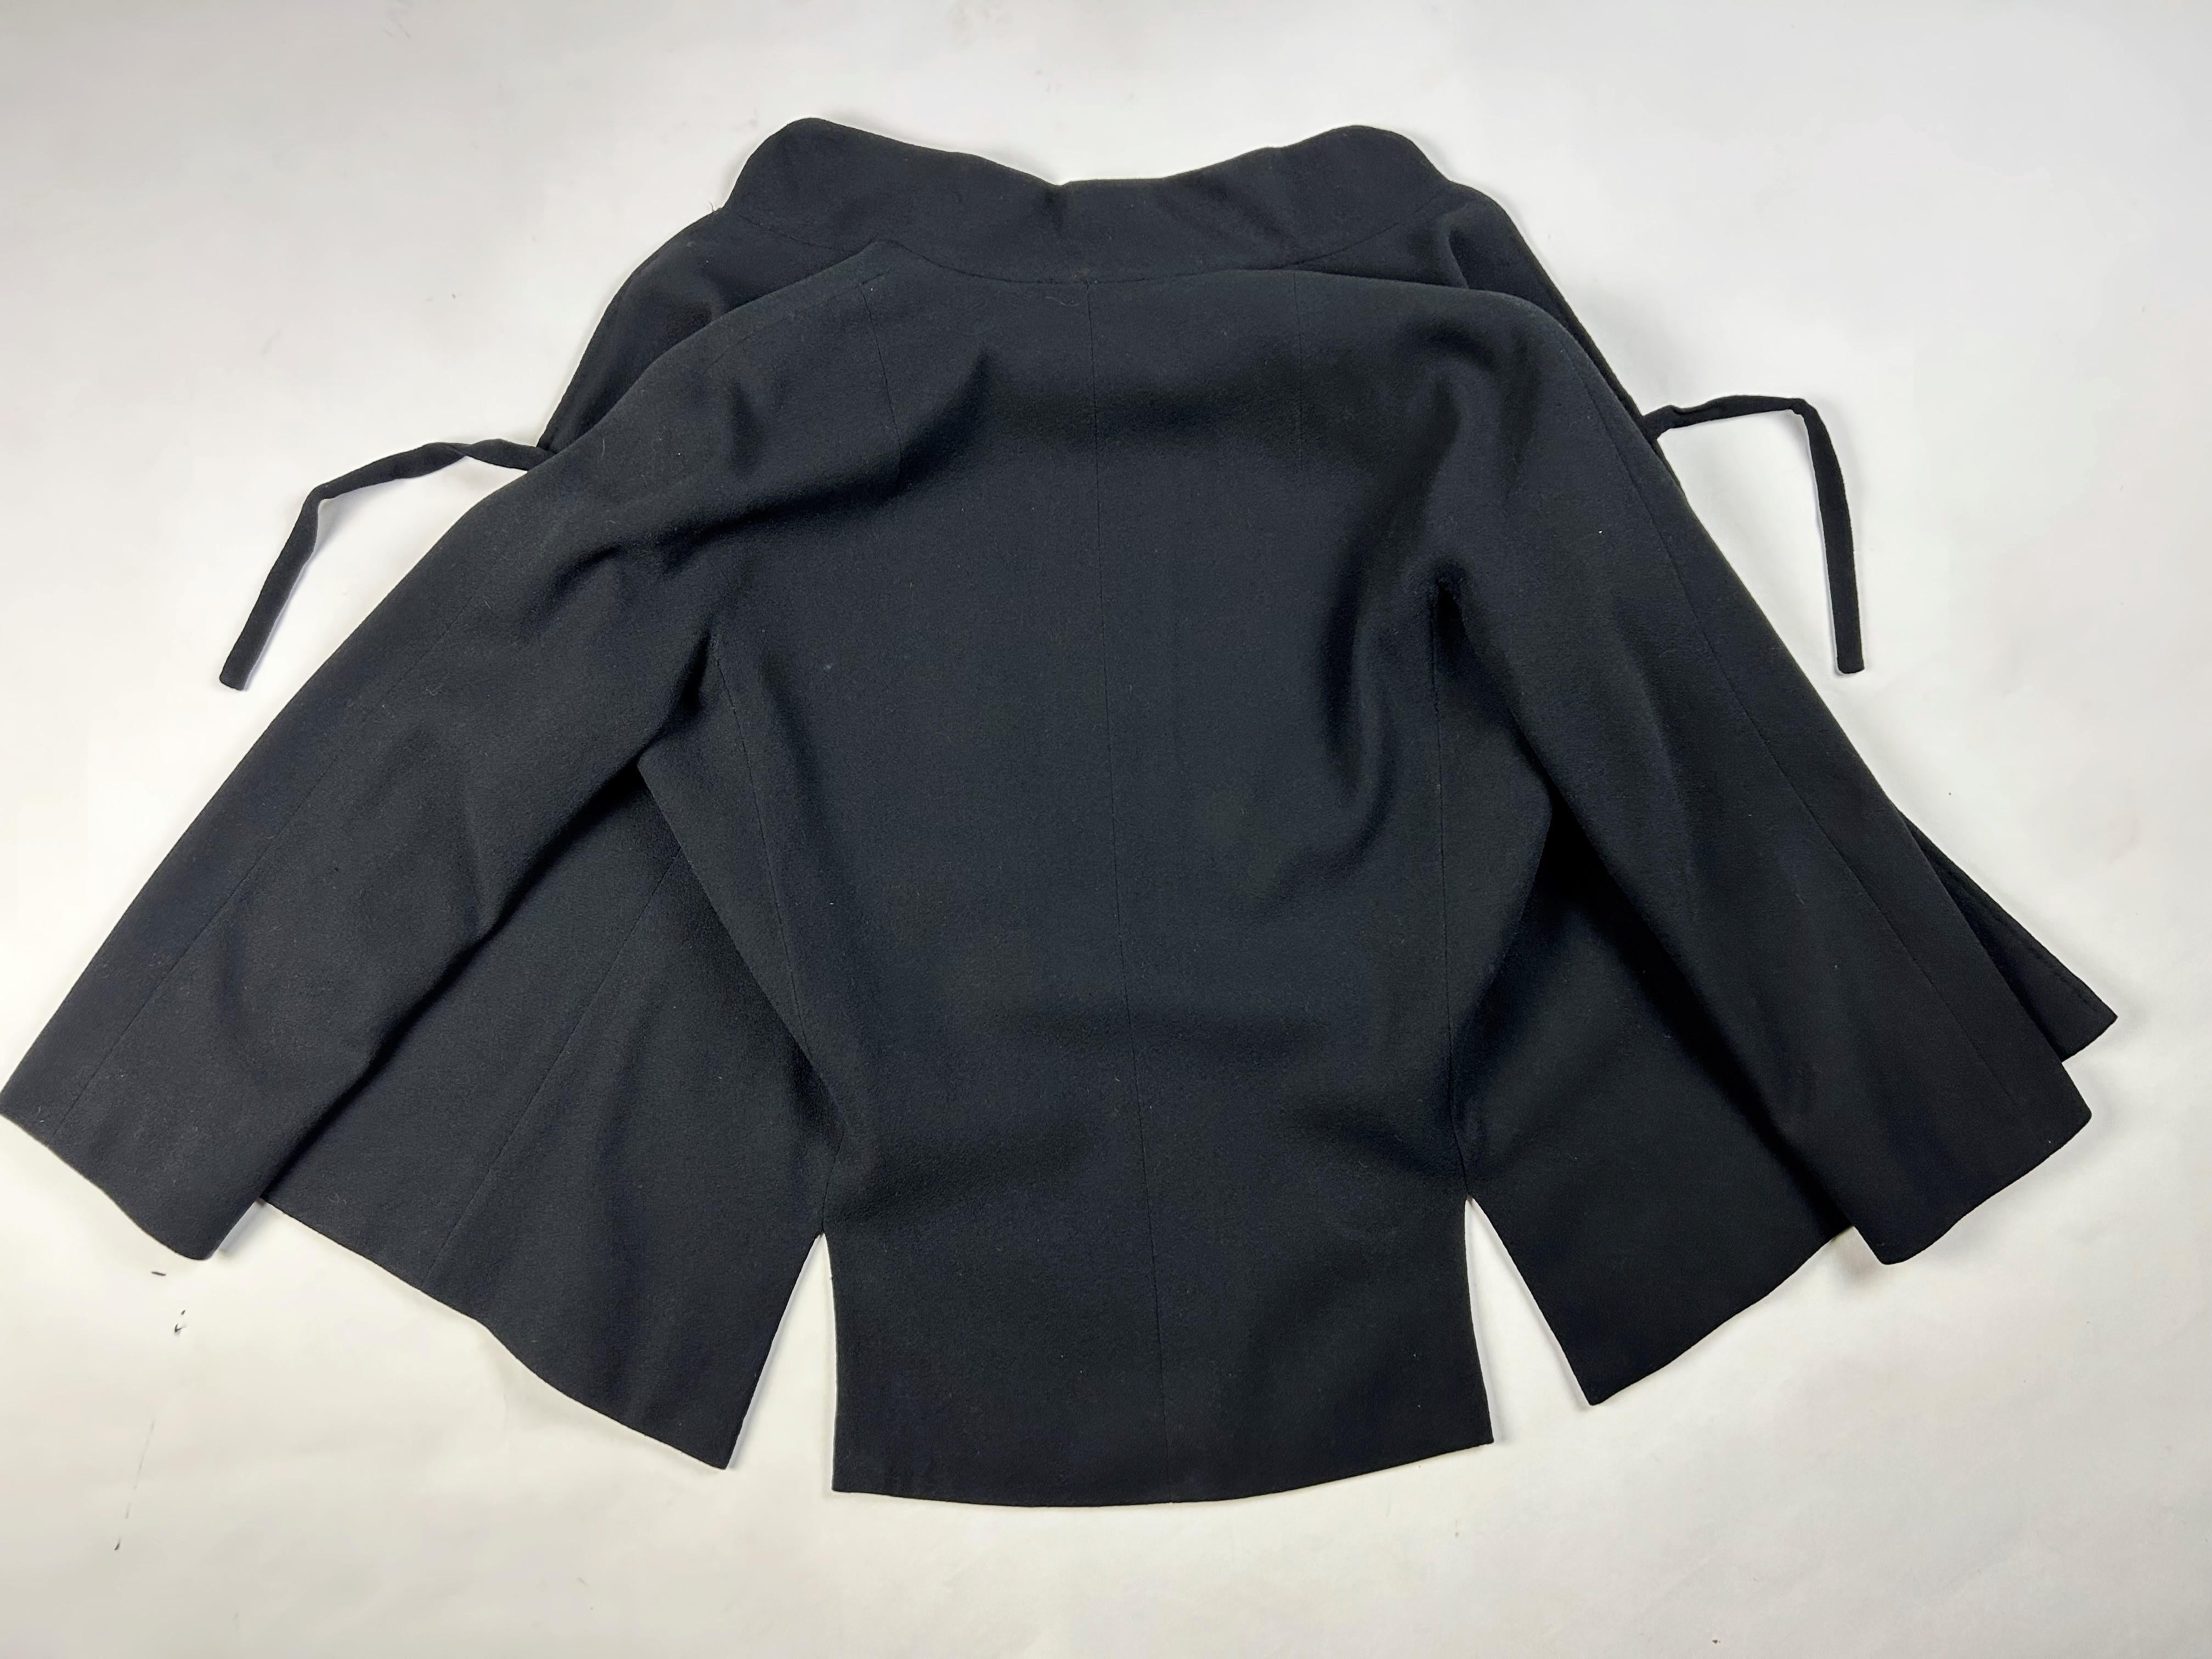 Schwarze Kimonojacke von Pierre Balmain Haute Couture n. 111036, ca. 1975-1980, Schwarz Damen im Angebot